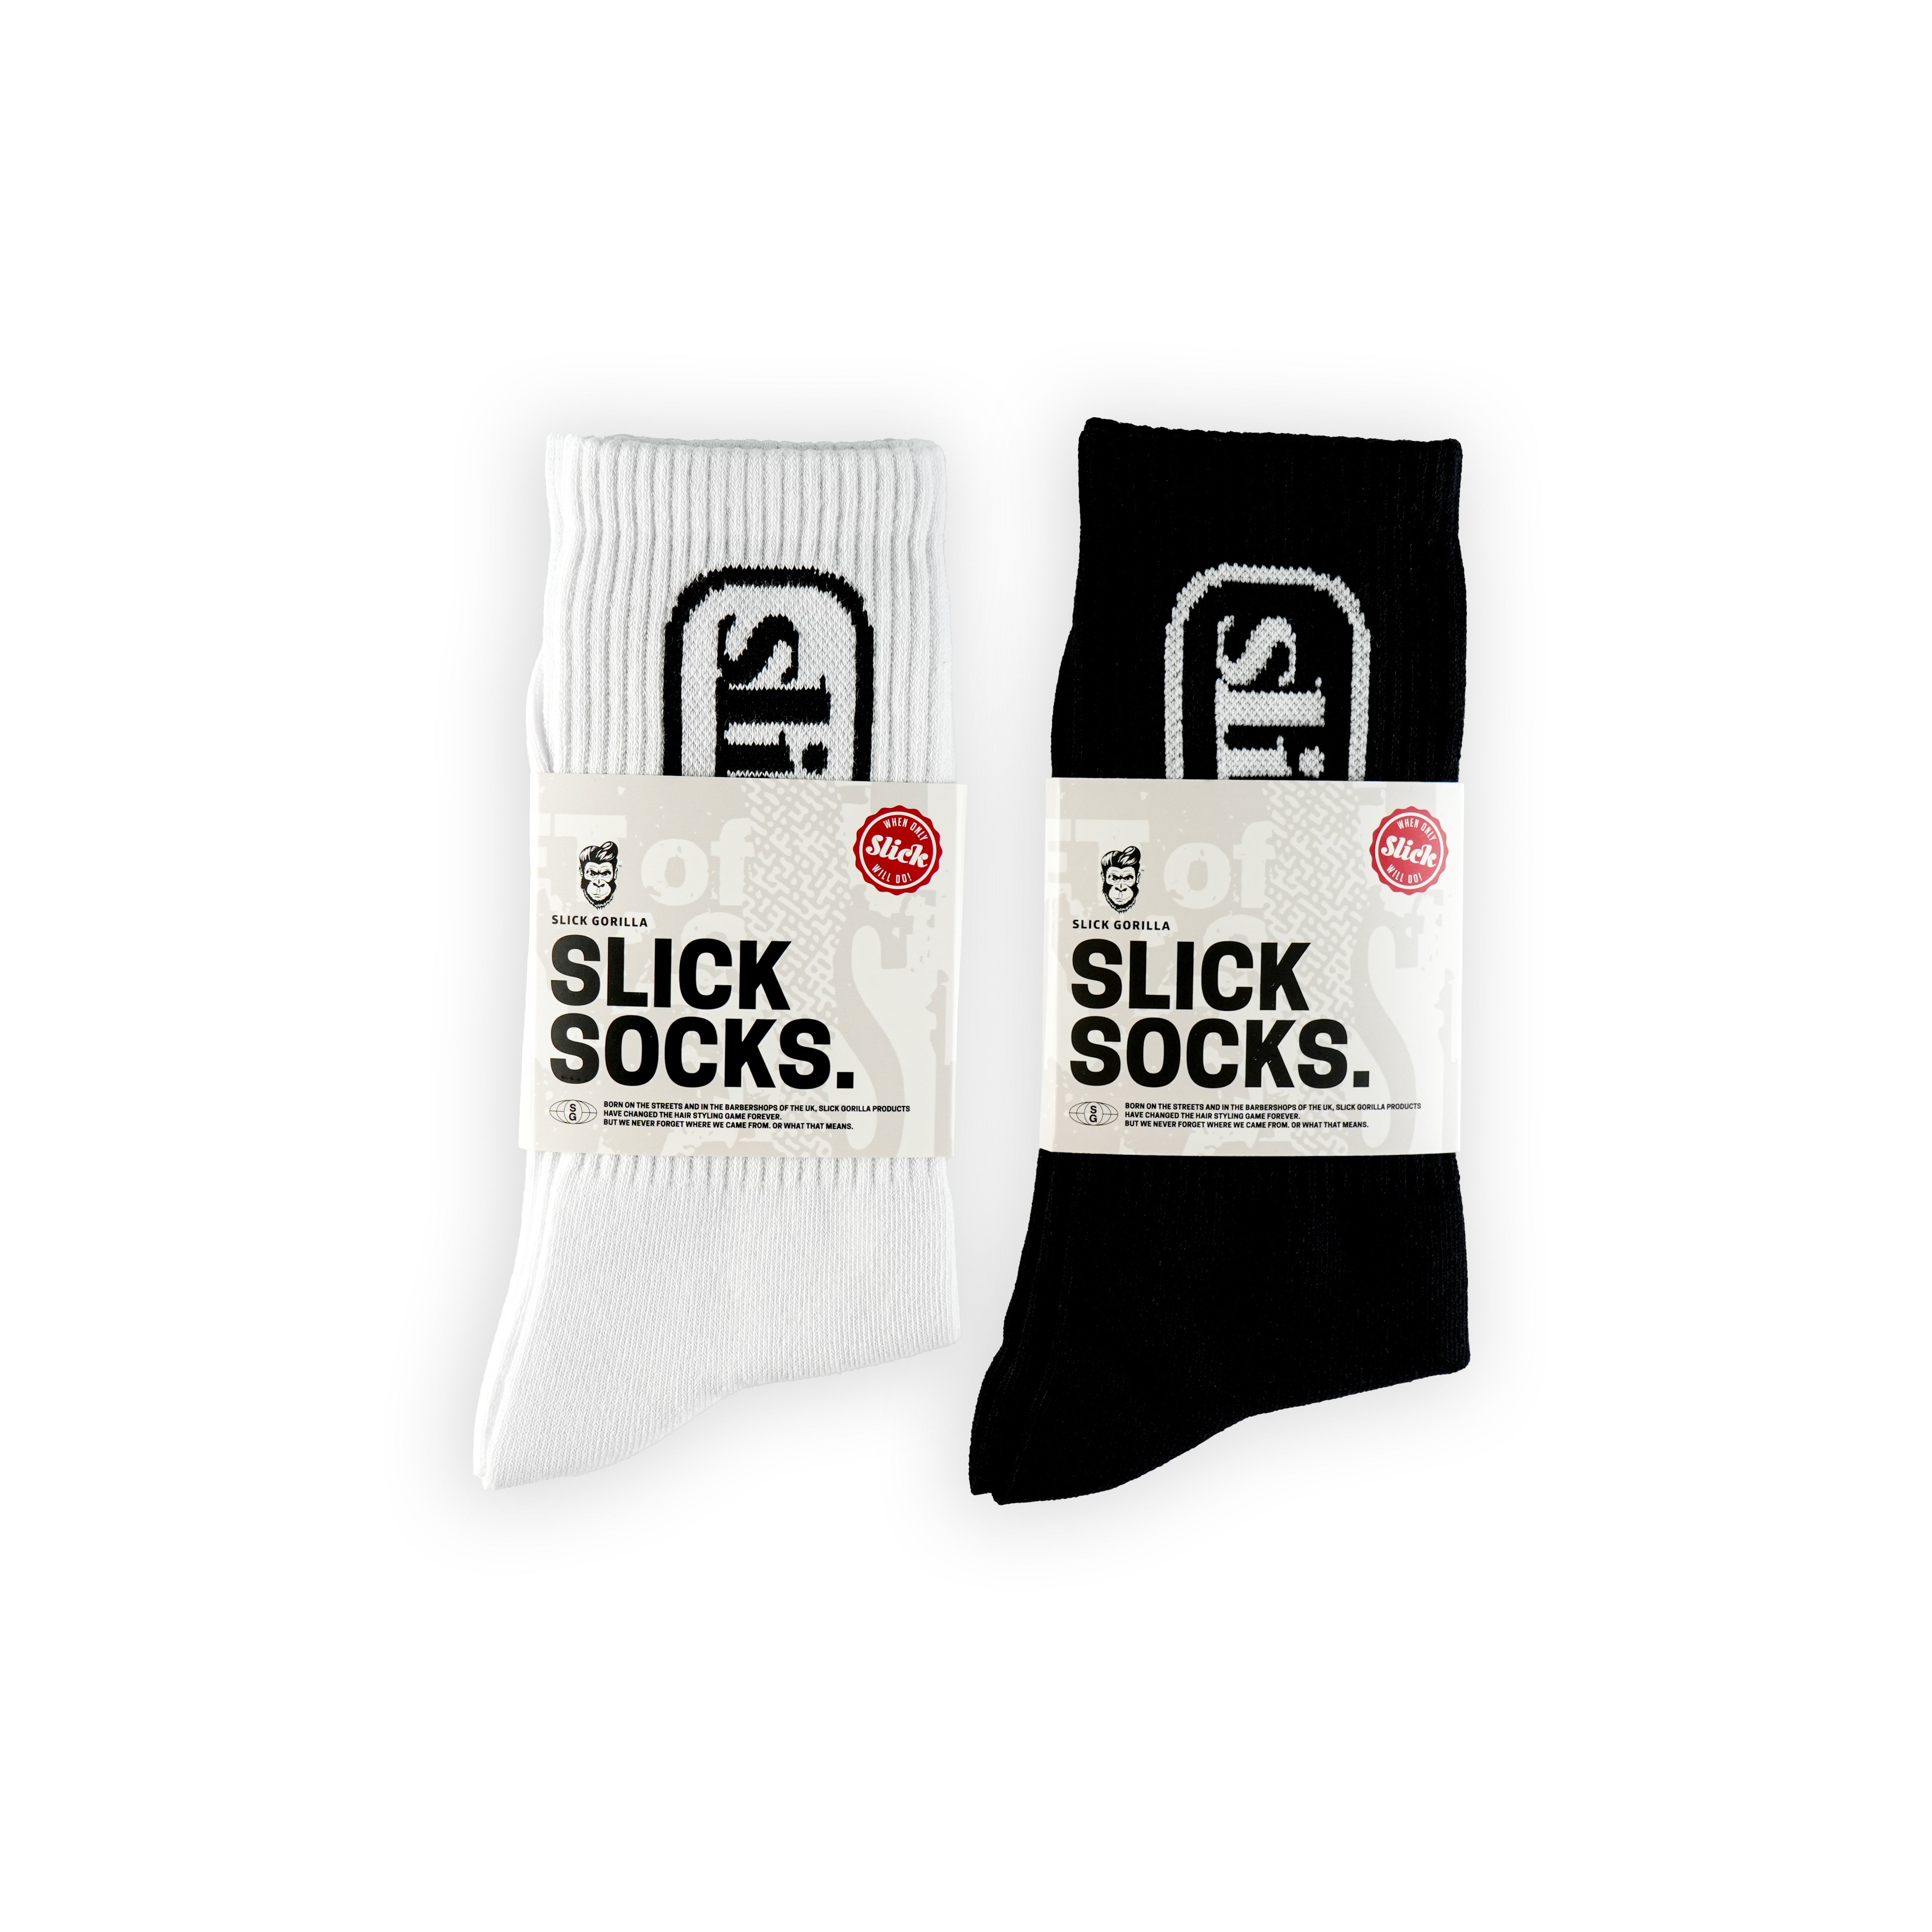 Slick Socks